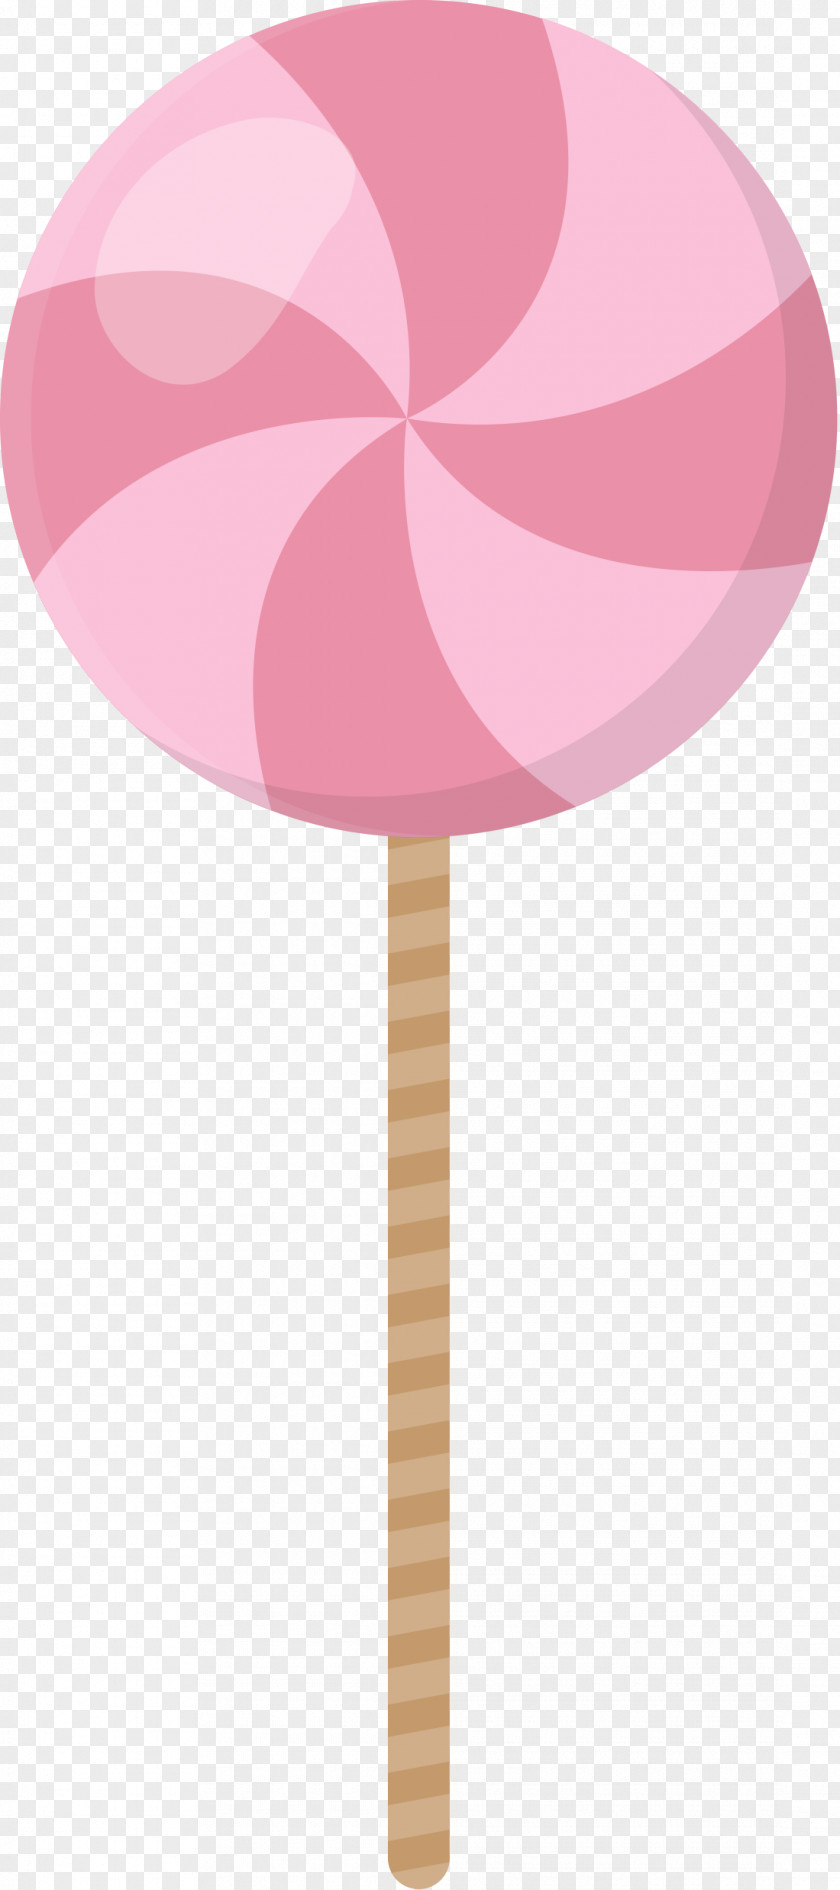 Candy Crush Saga Lollipop Icon PNG